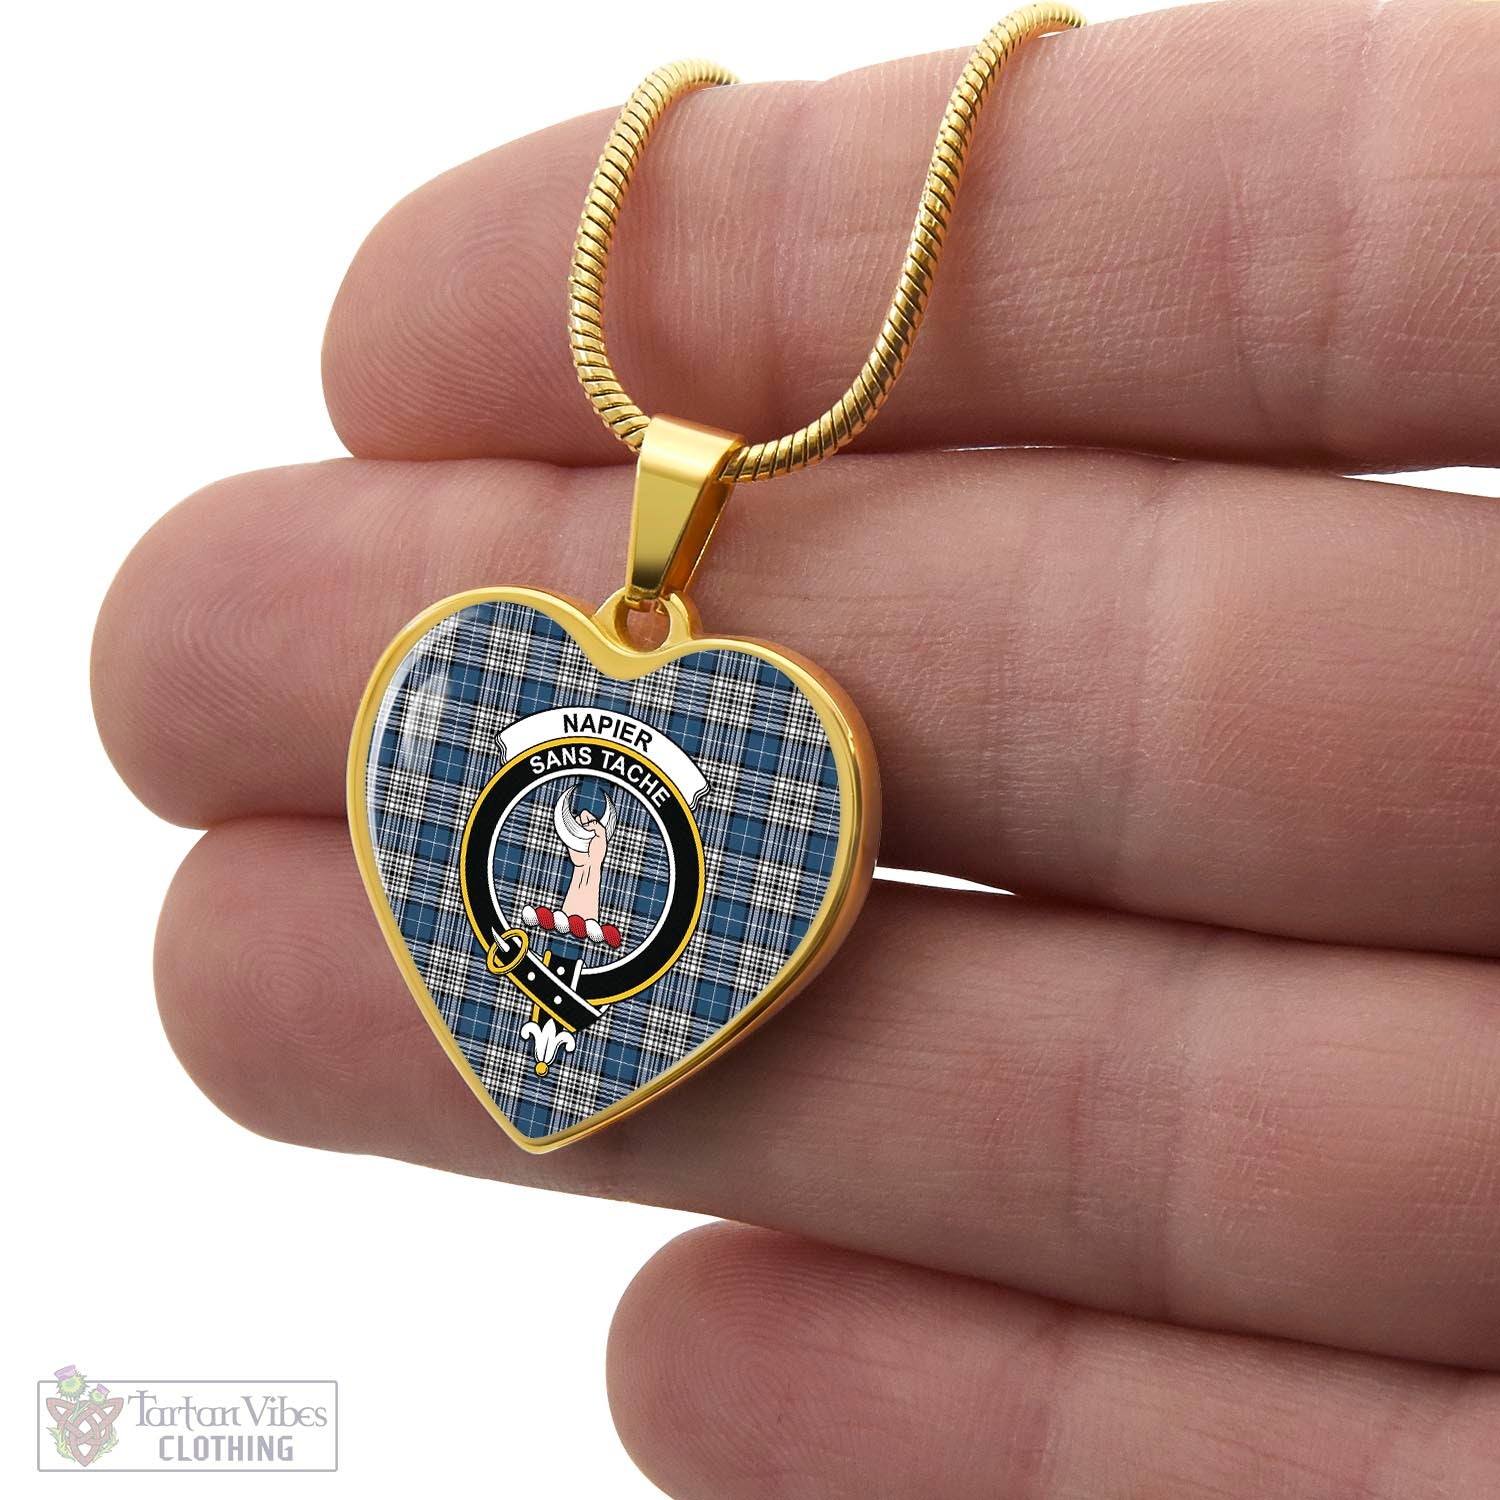 Tartan Vibes Clothing Napier Modern Tartan Heart Necklace with Family Crest